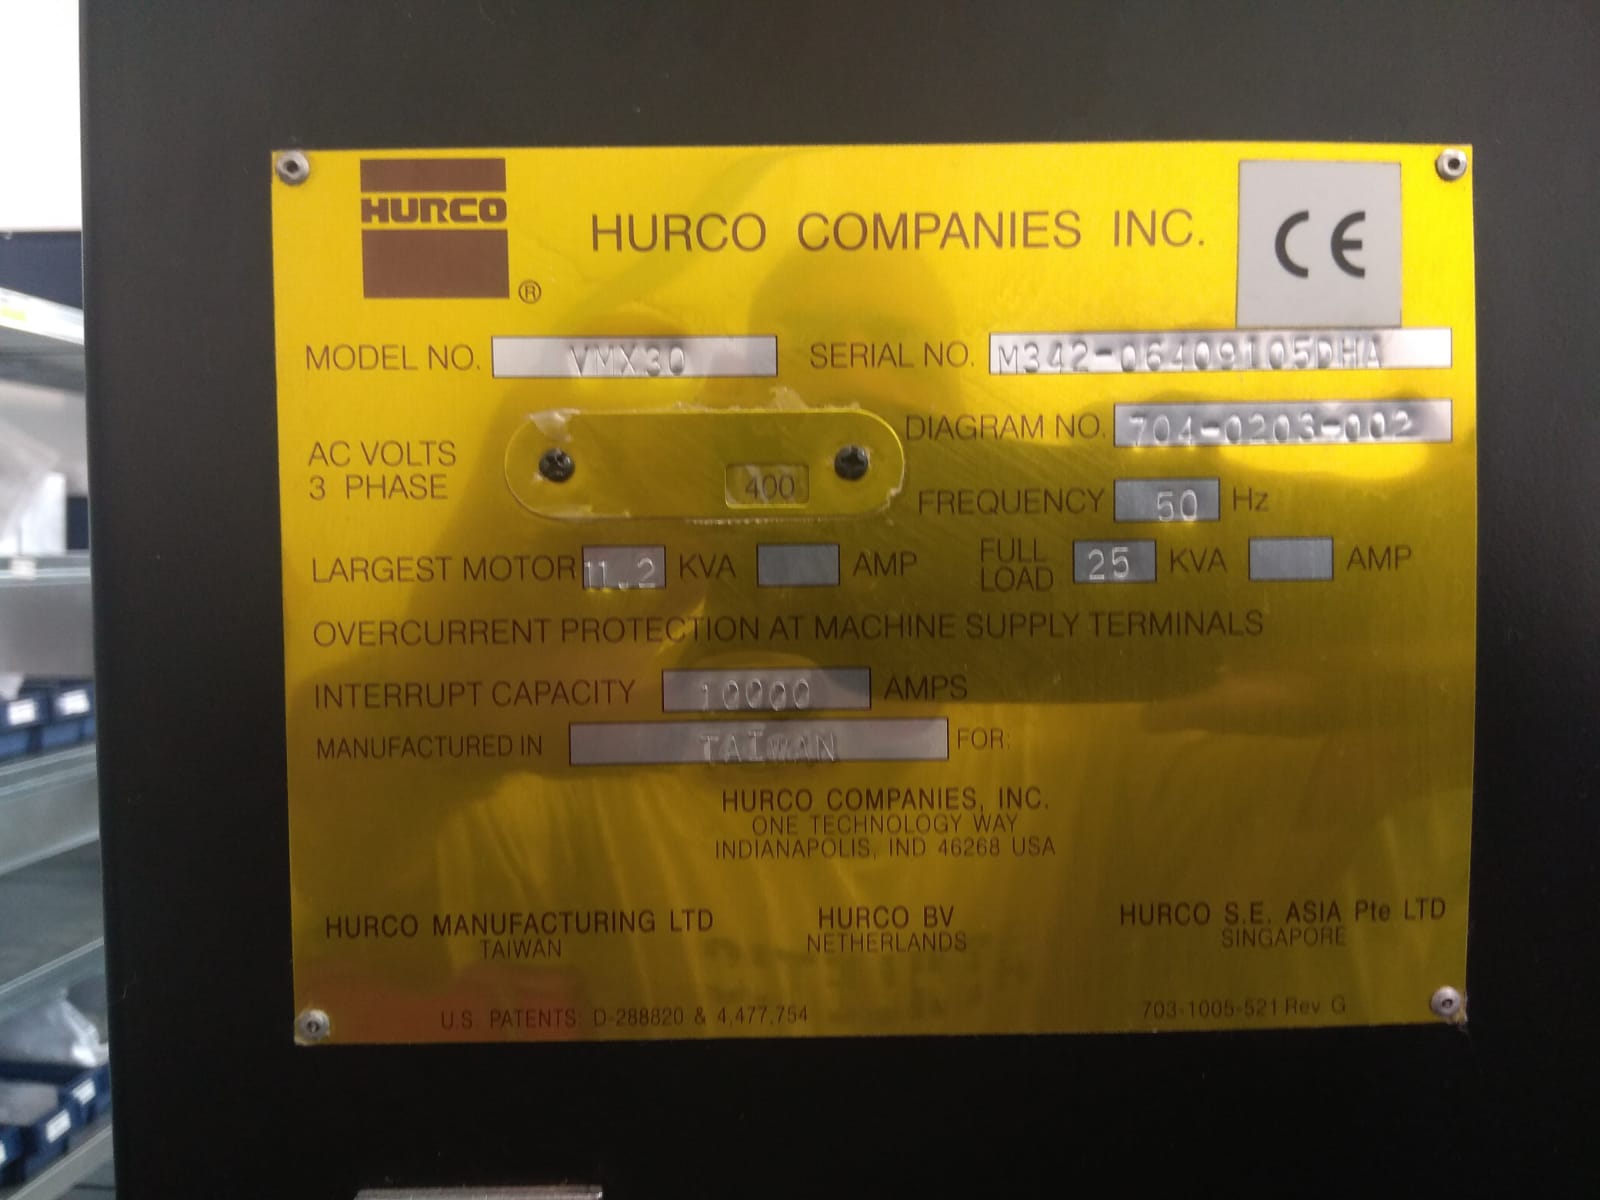 5325-hurco-vmx30.07